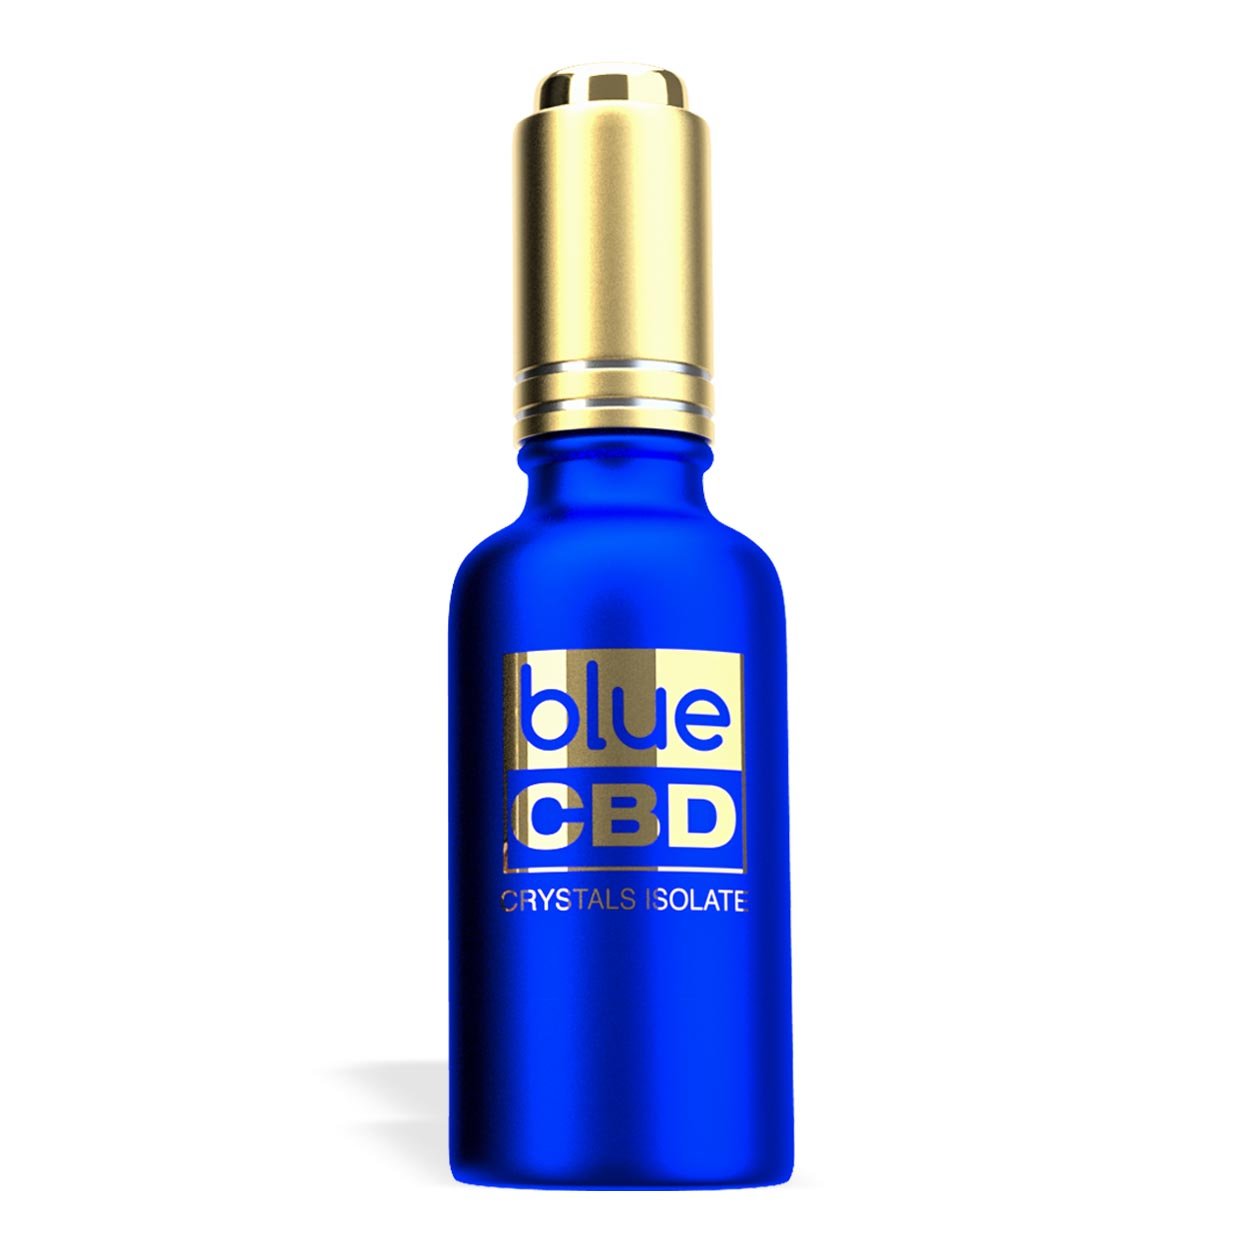 Spanish Brandy Flavor Blue CBD Crystal Isolate - 550mg